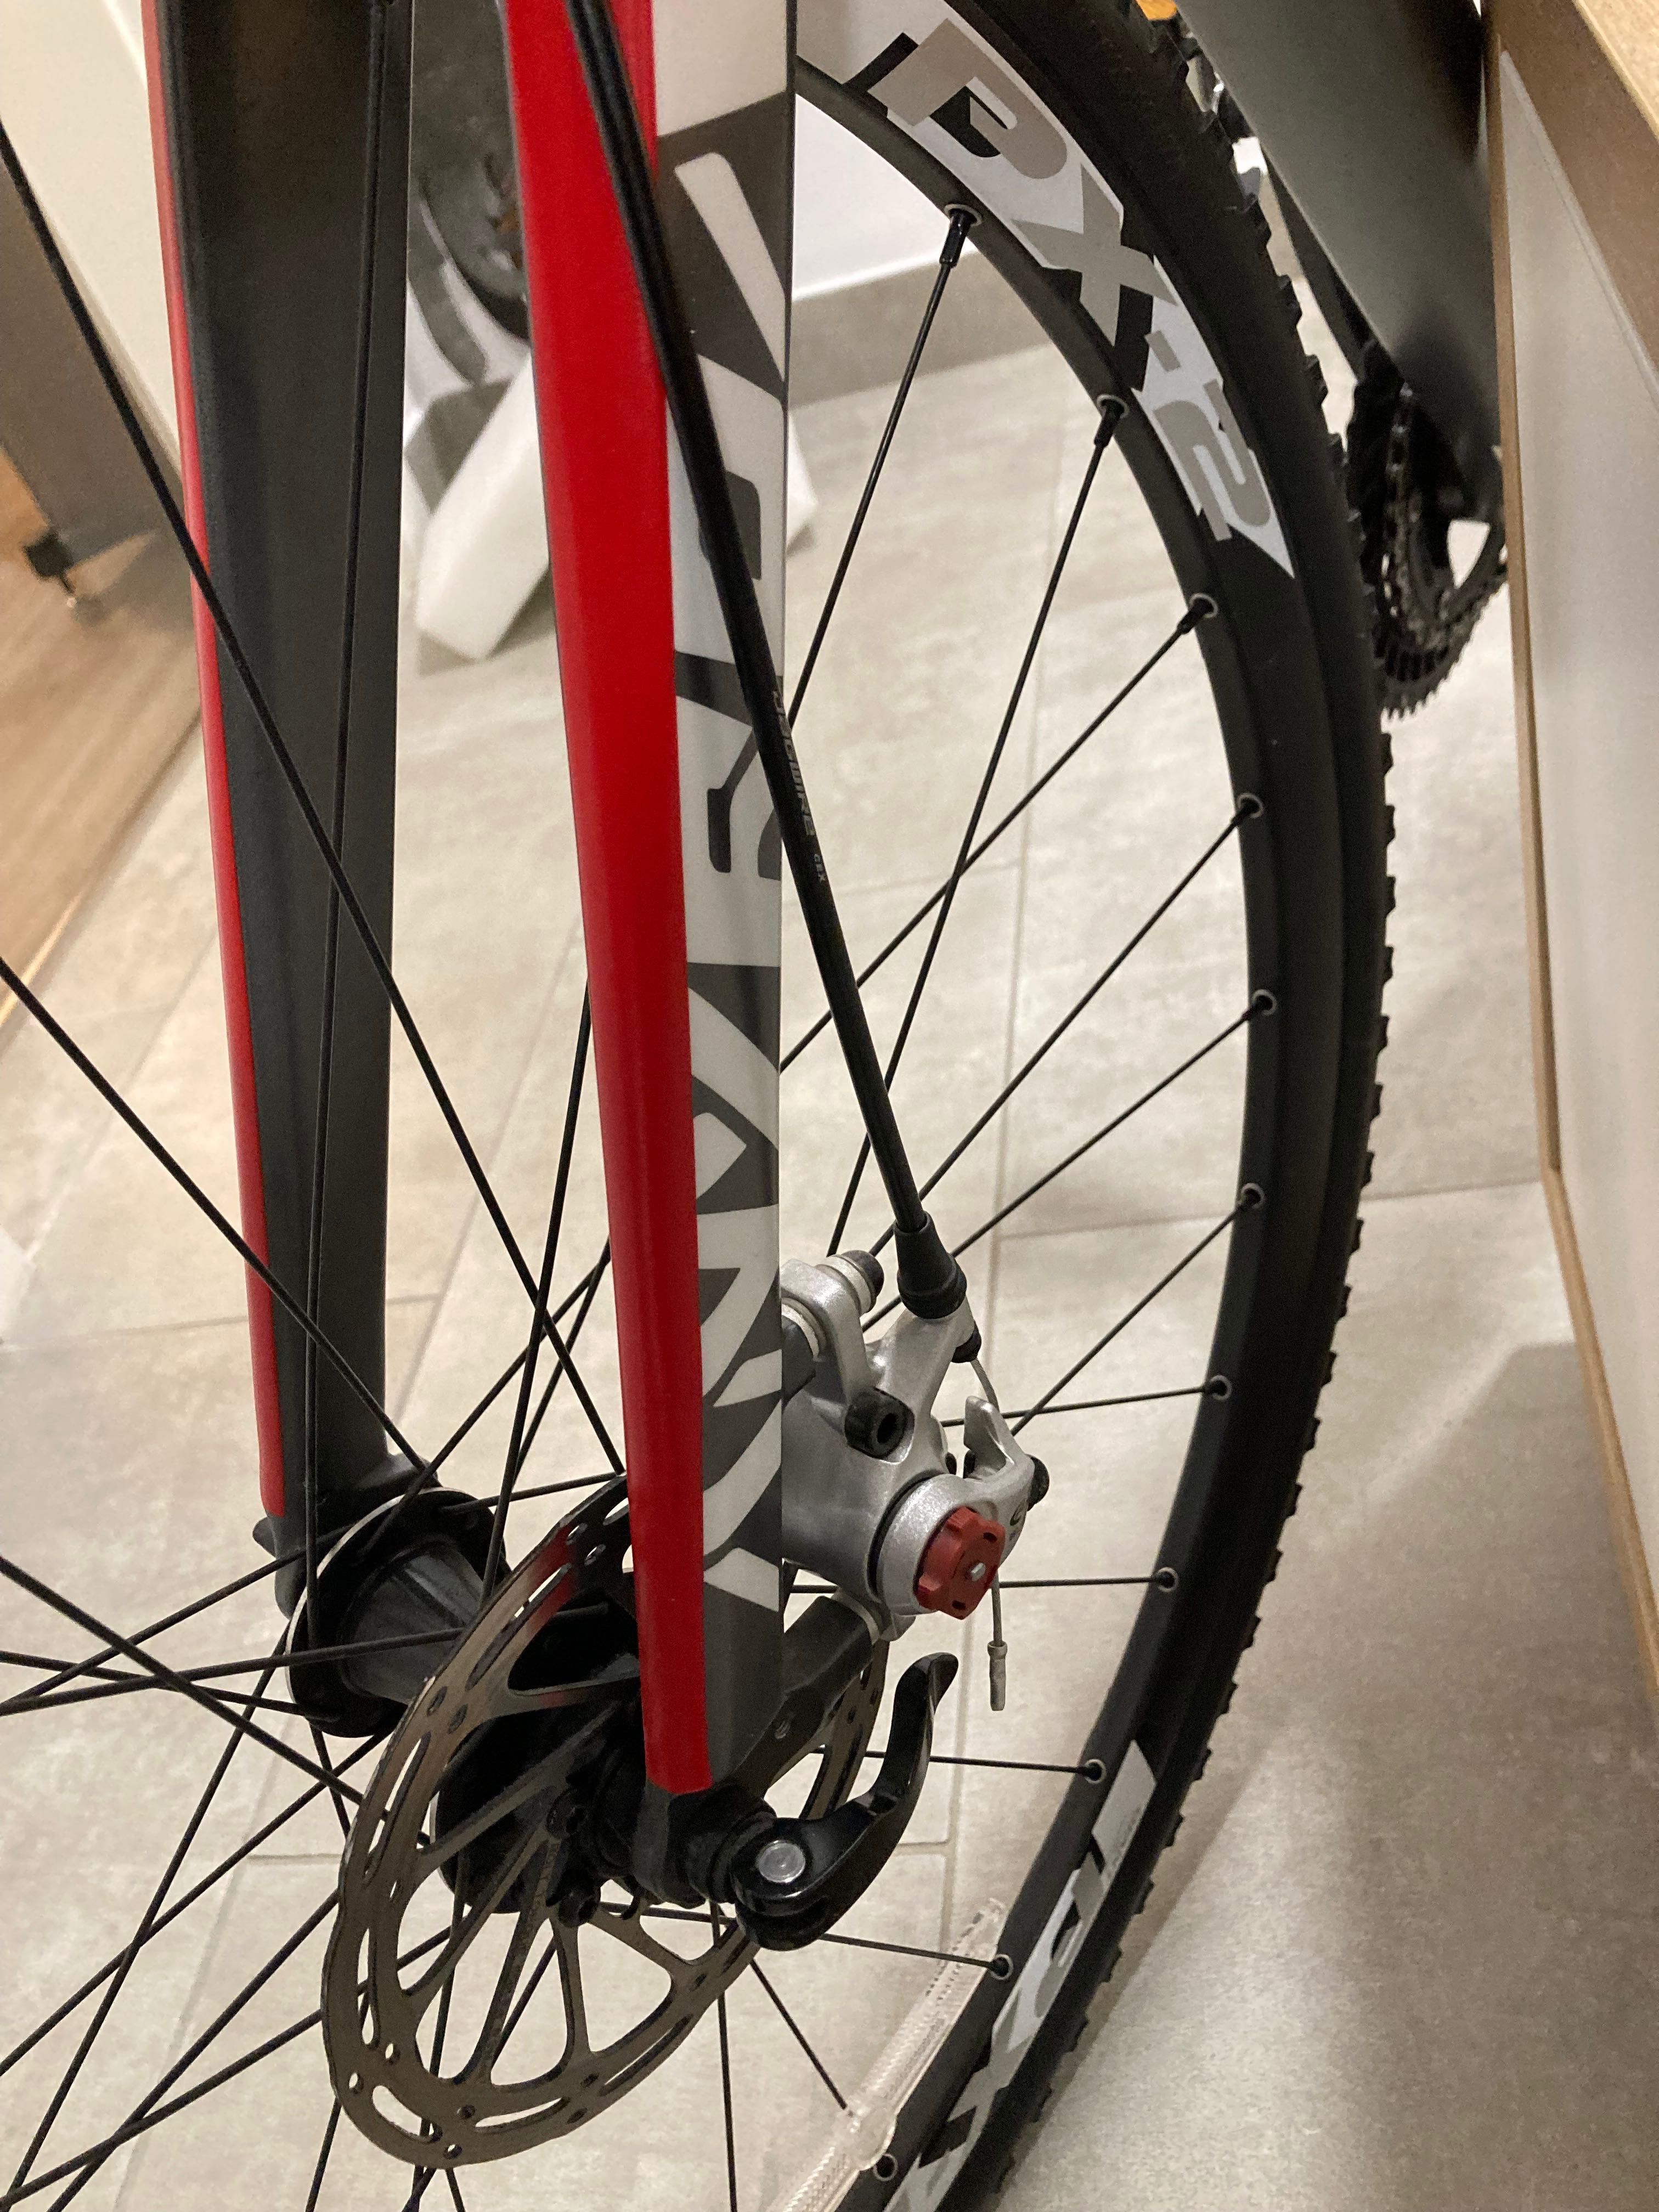 Bicicleta Giant Anyroad 52’ carbon ca noua